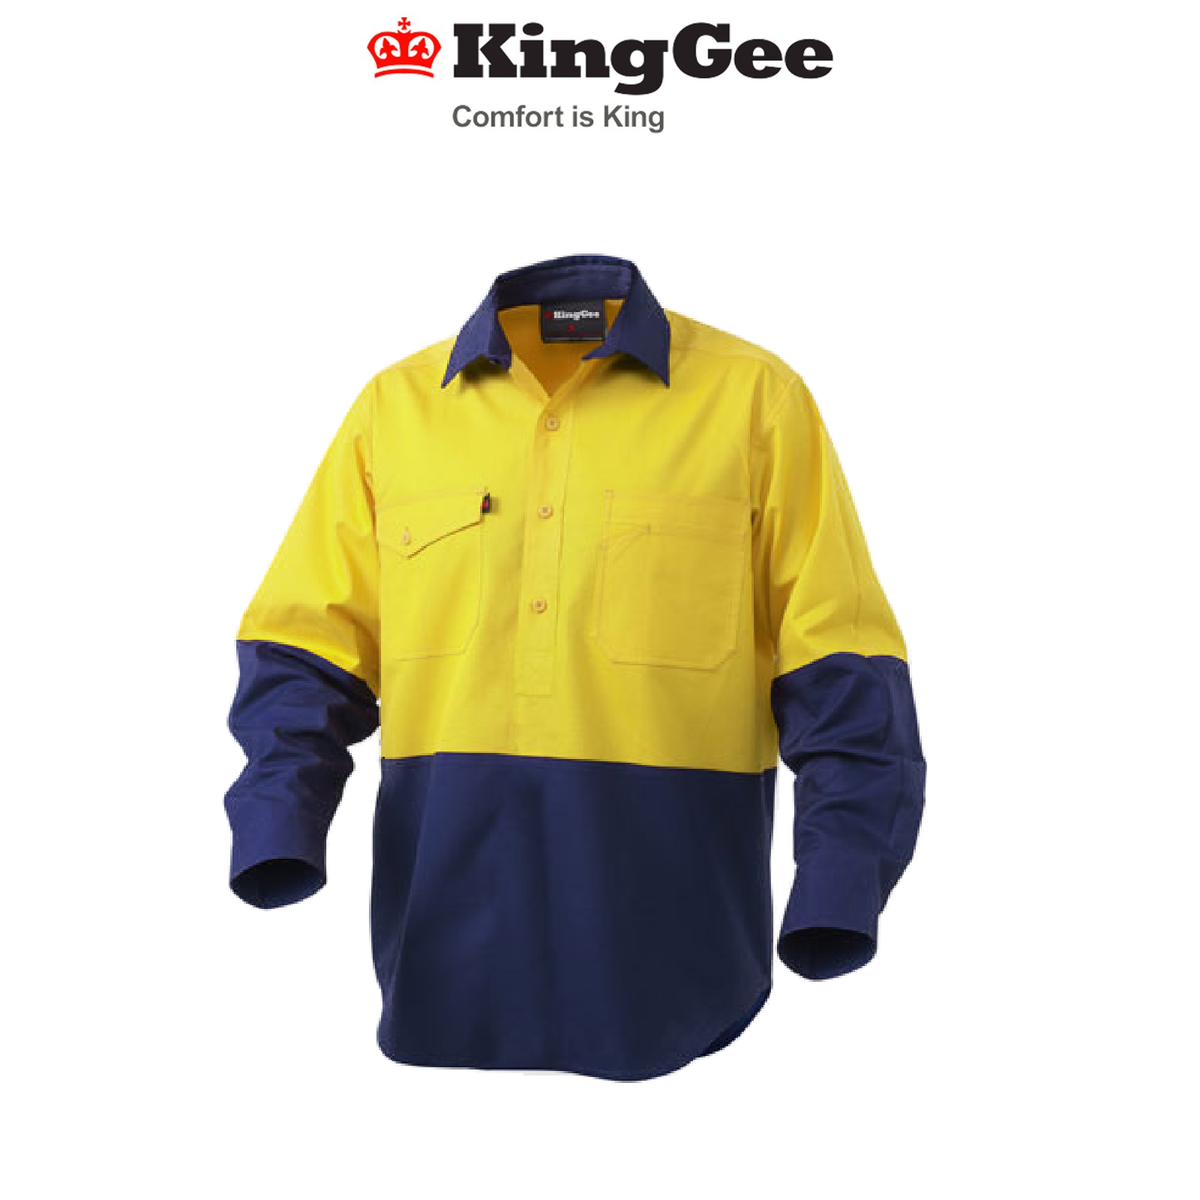 KingGee Workcool Hi-Vis Closed Front Shirt Long Sleeve Comfy Workwear K54876